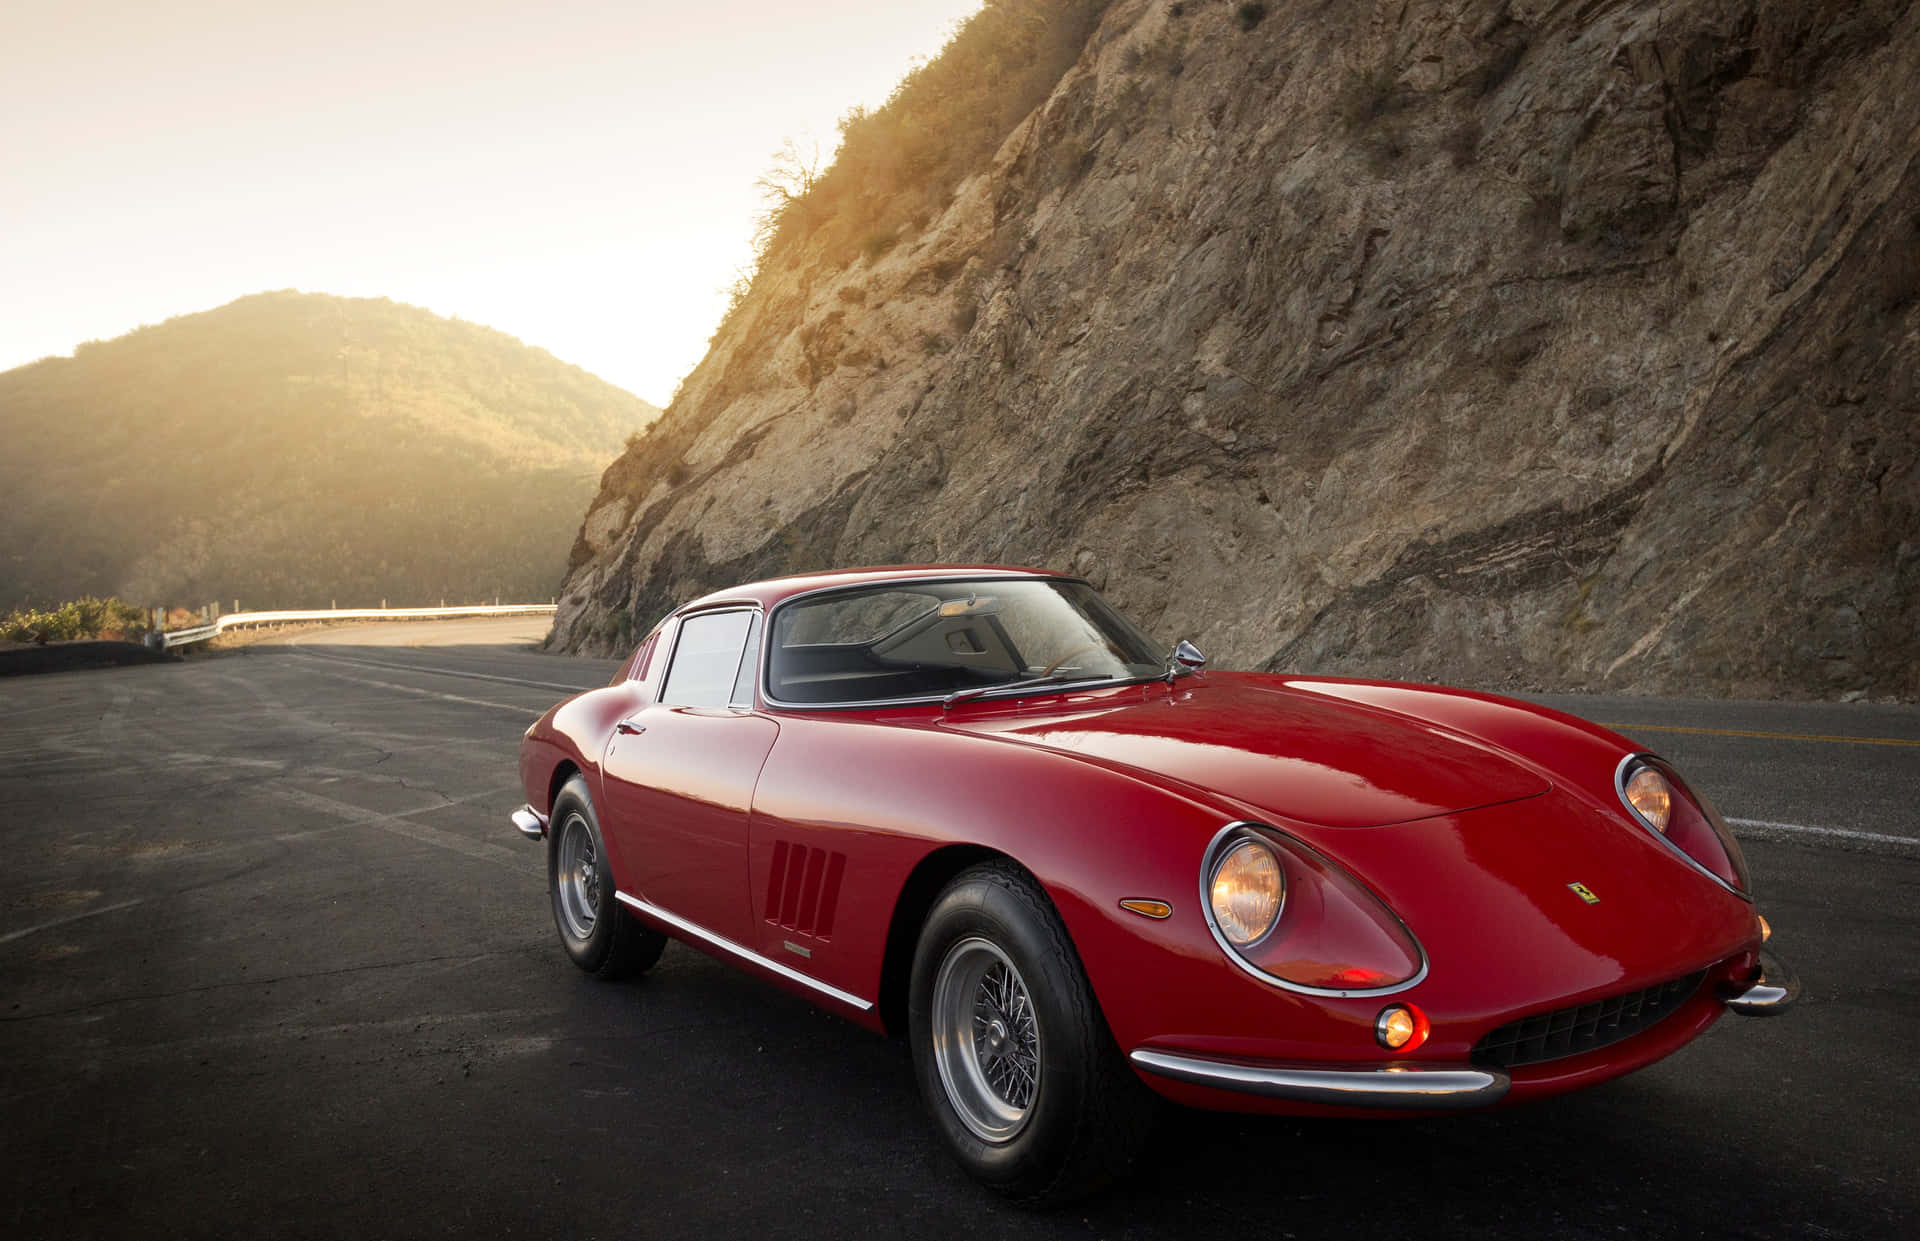 Enjoy the power of a classic Ferrari Wallpaper